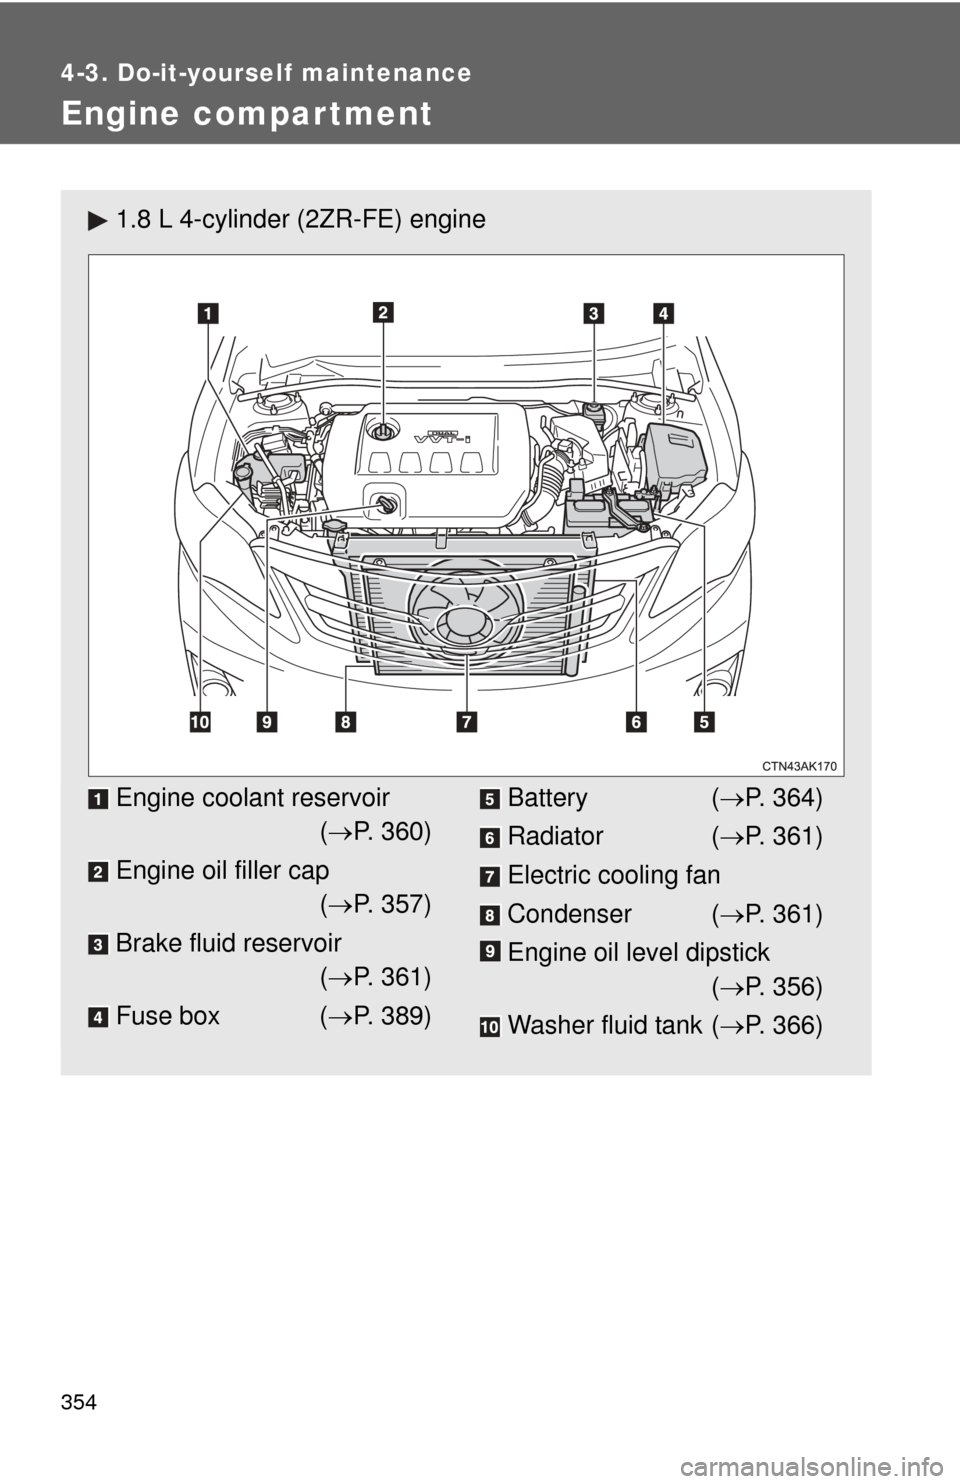 TOYOTA COROLLA 2012 10.G User Guide 354
4-3. Do-it-yourself maintenance
Engine compar tment
1.8 L 4-cylinder (2ZR-FE) engine
Engine coolant reservoir( P. 360)
Engine oil filler cap ( P. 357)
Brake fluid reservoir ( P. 361)
Fuse